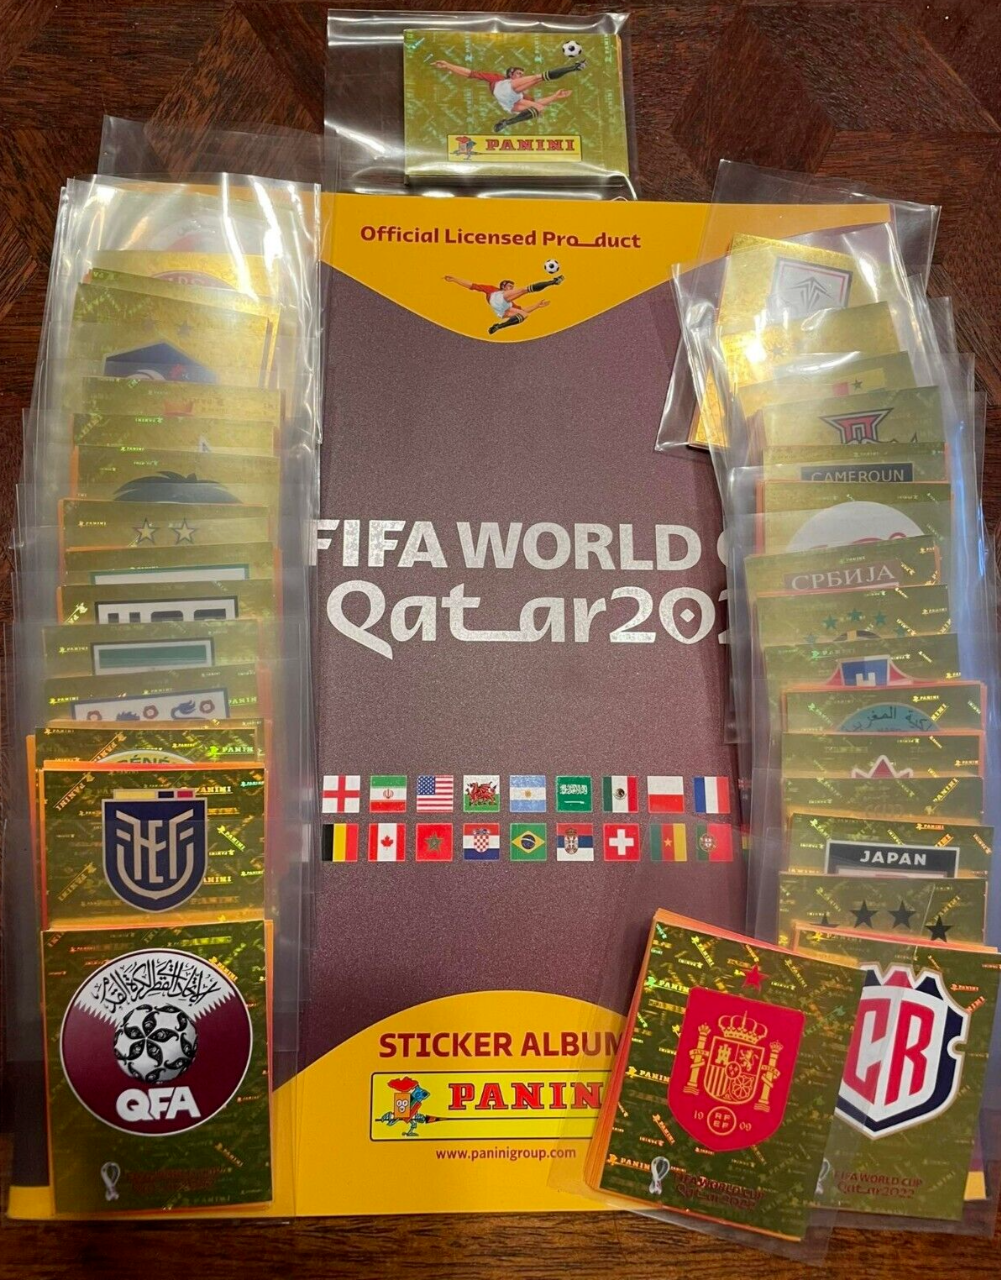 Fifa World Cup Qatar 2022 image manquante version Belge